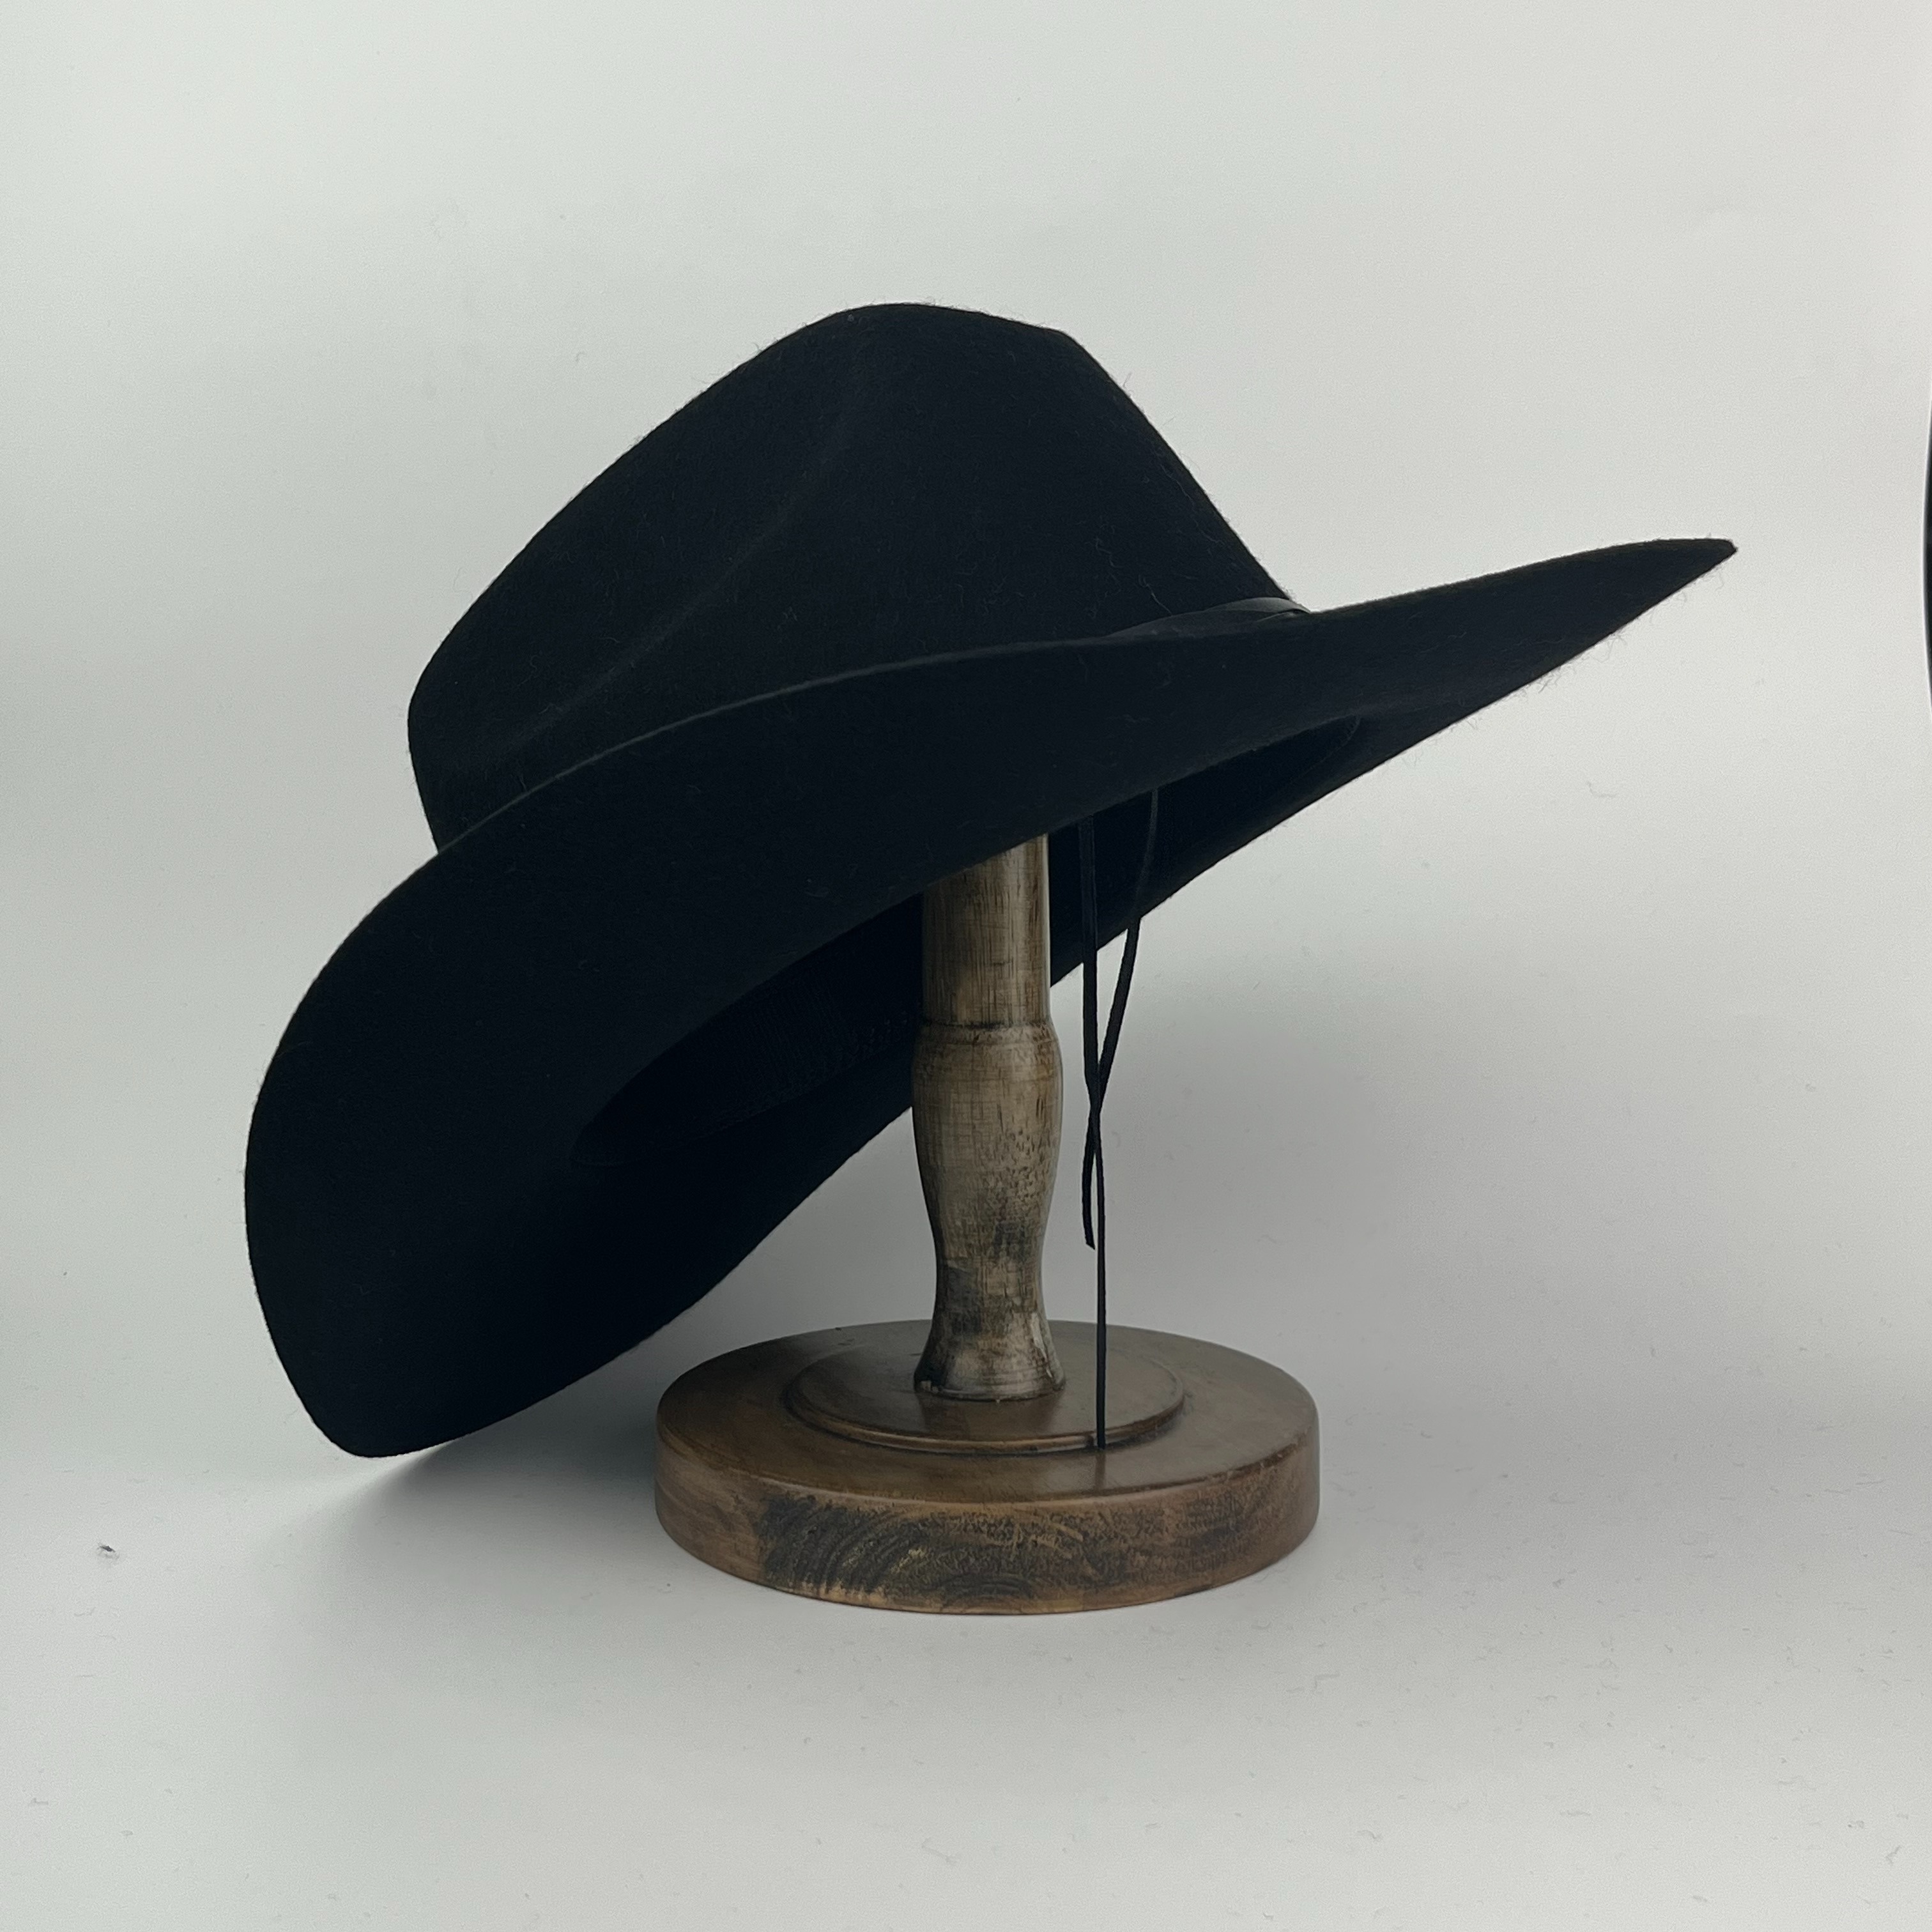 1 pieza Sombrero cowboy para mujeres caqui jacquard PU remache